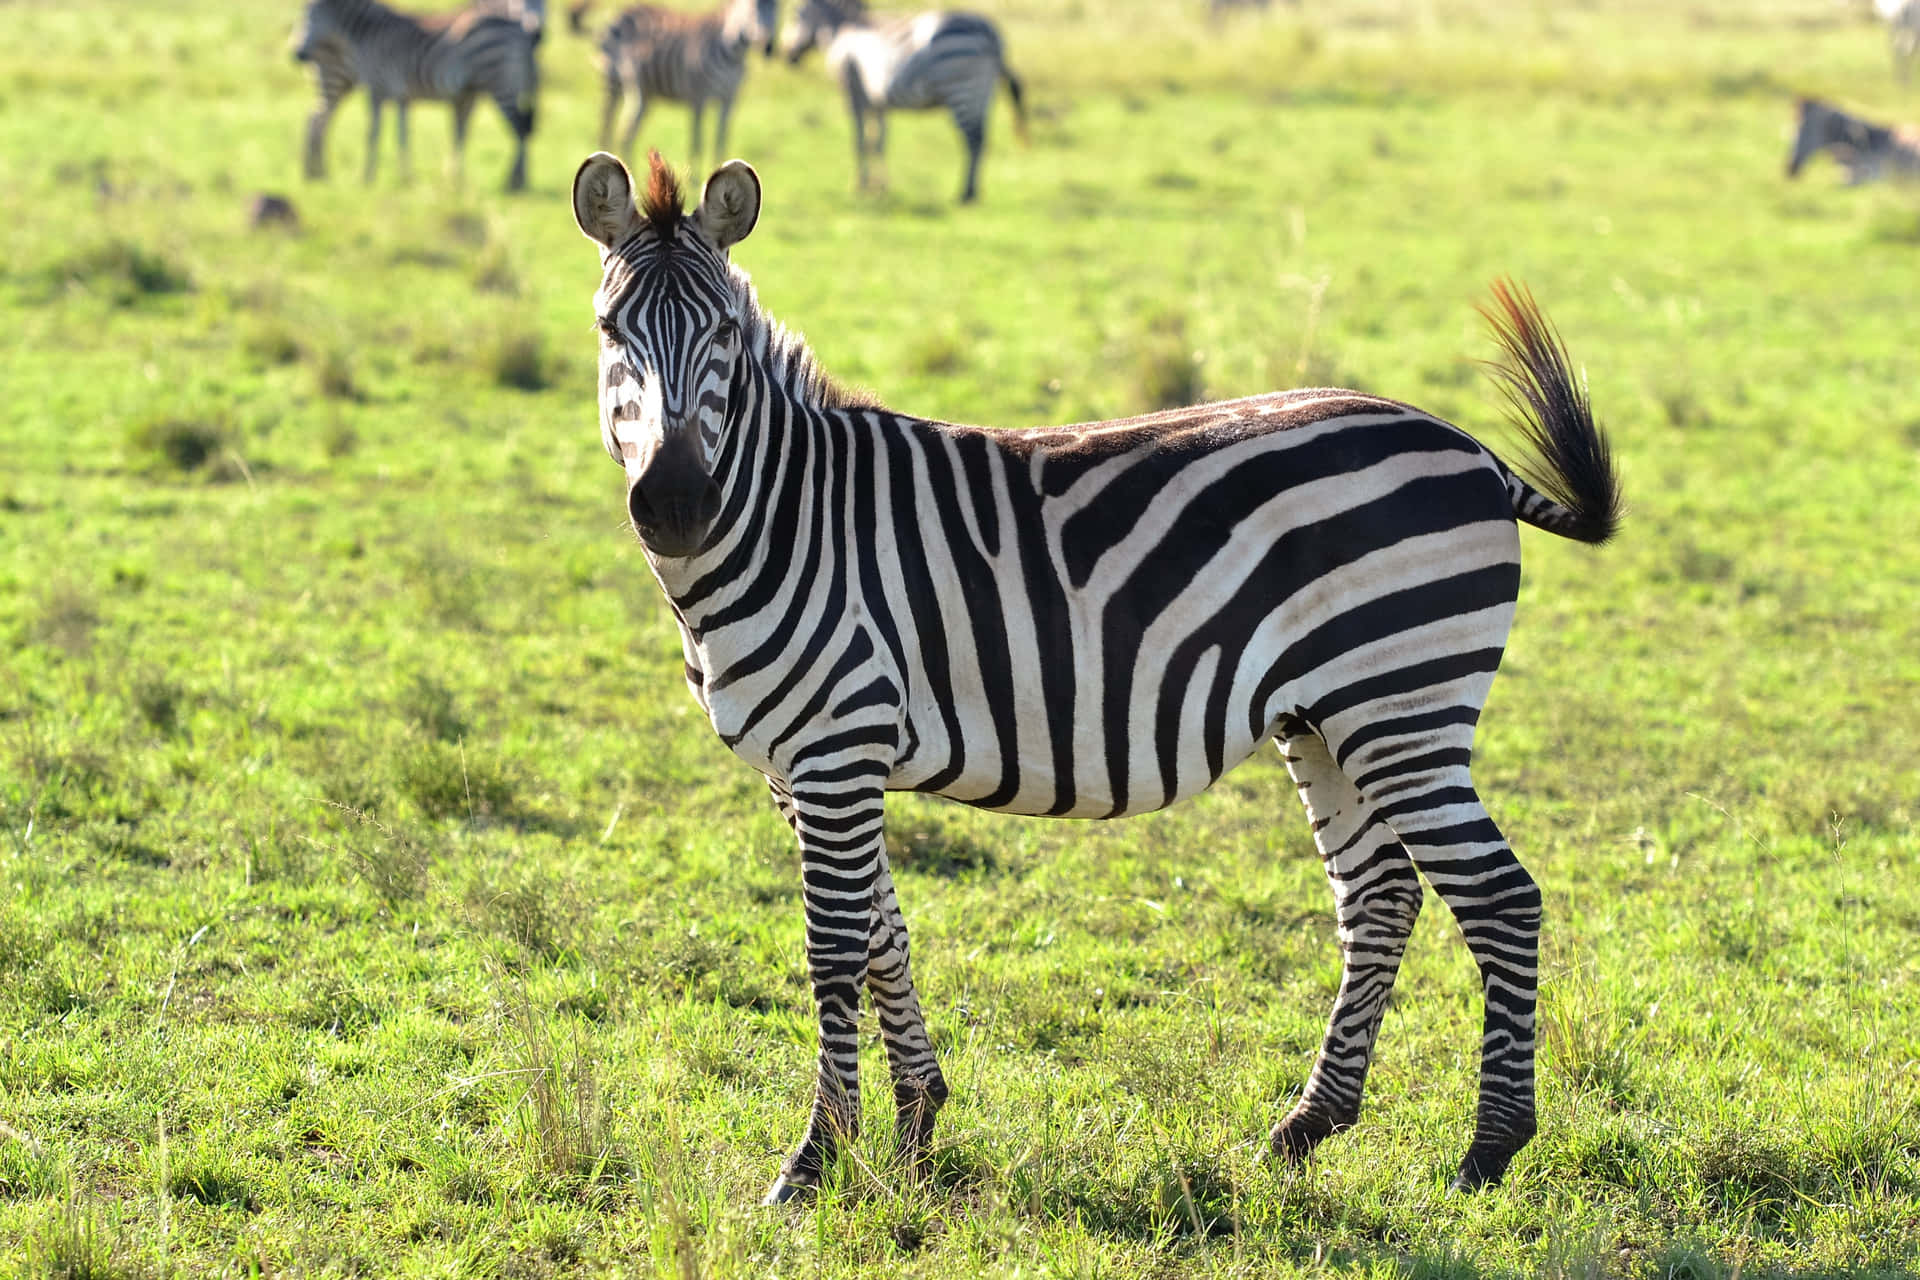 A Black and White Equine: Zebra Strips